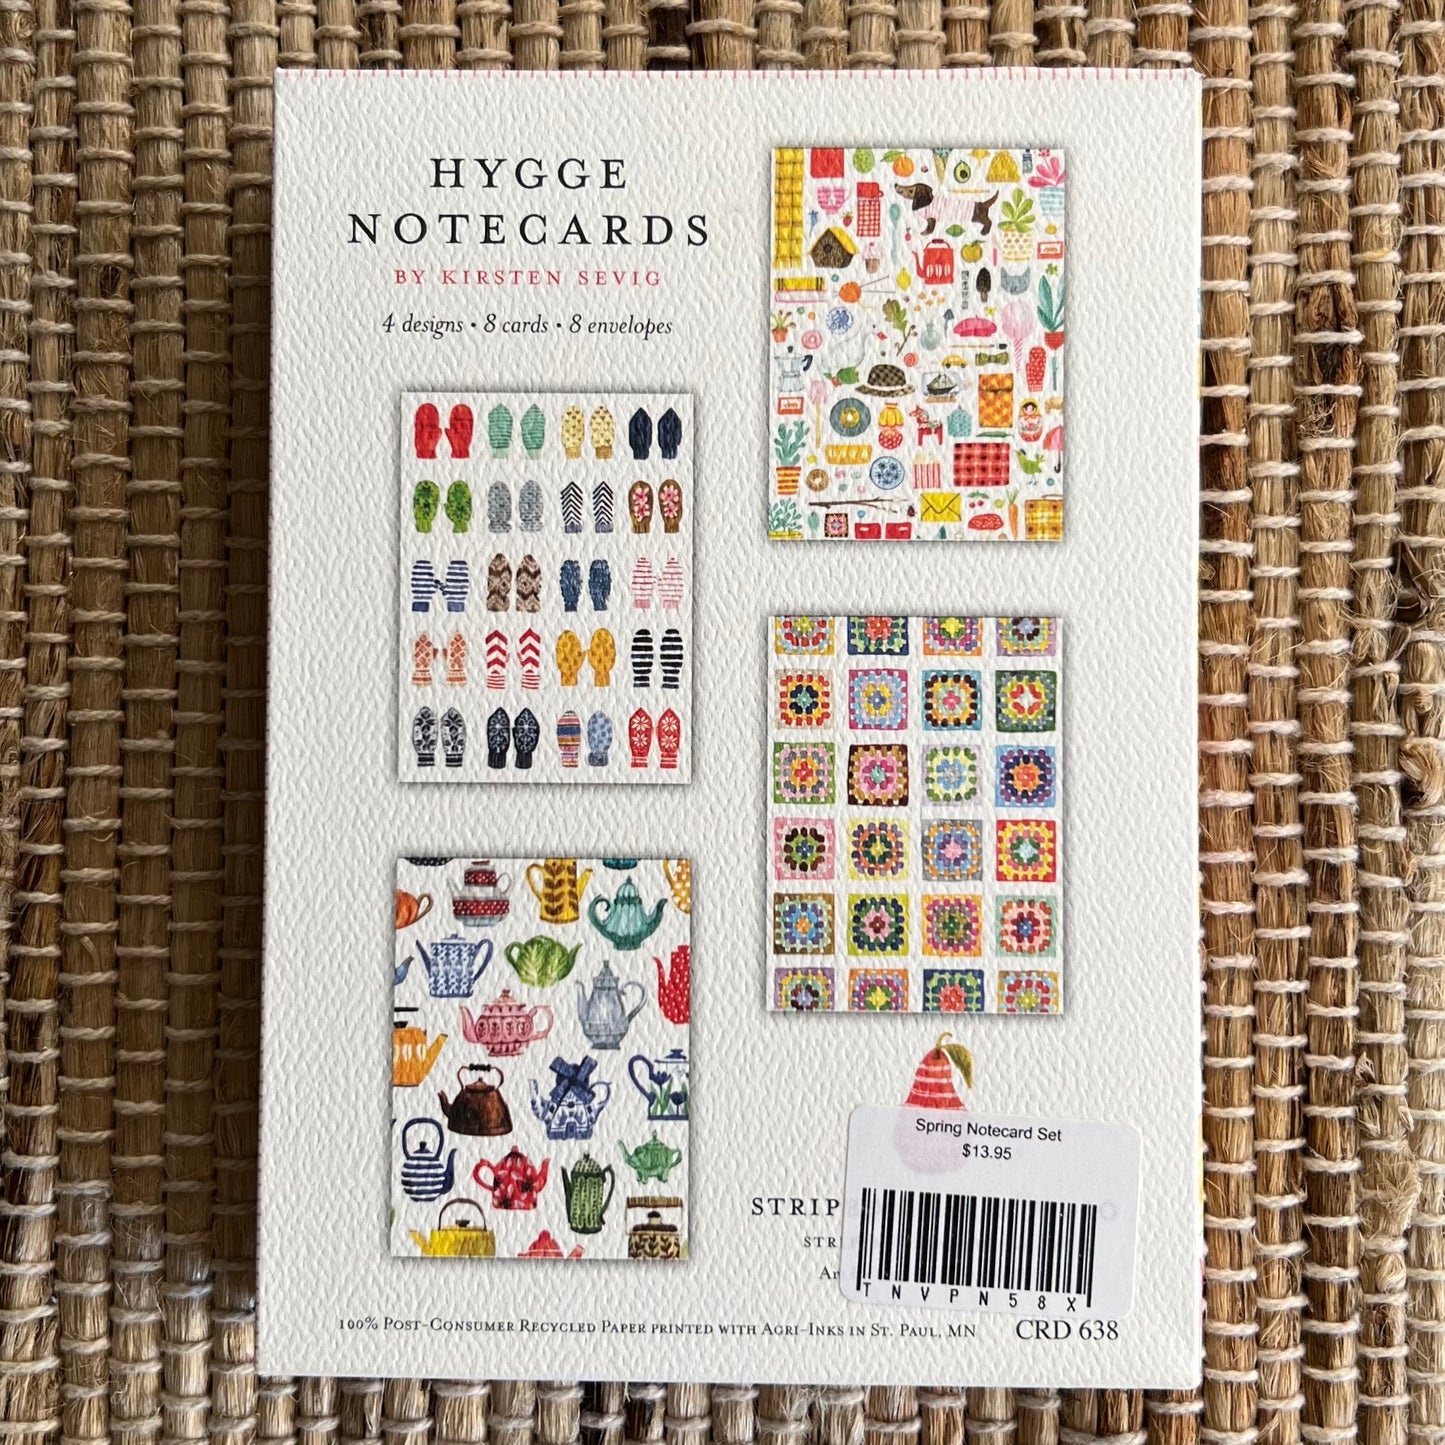 Hygge Notecards by Kristen Sevig